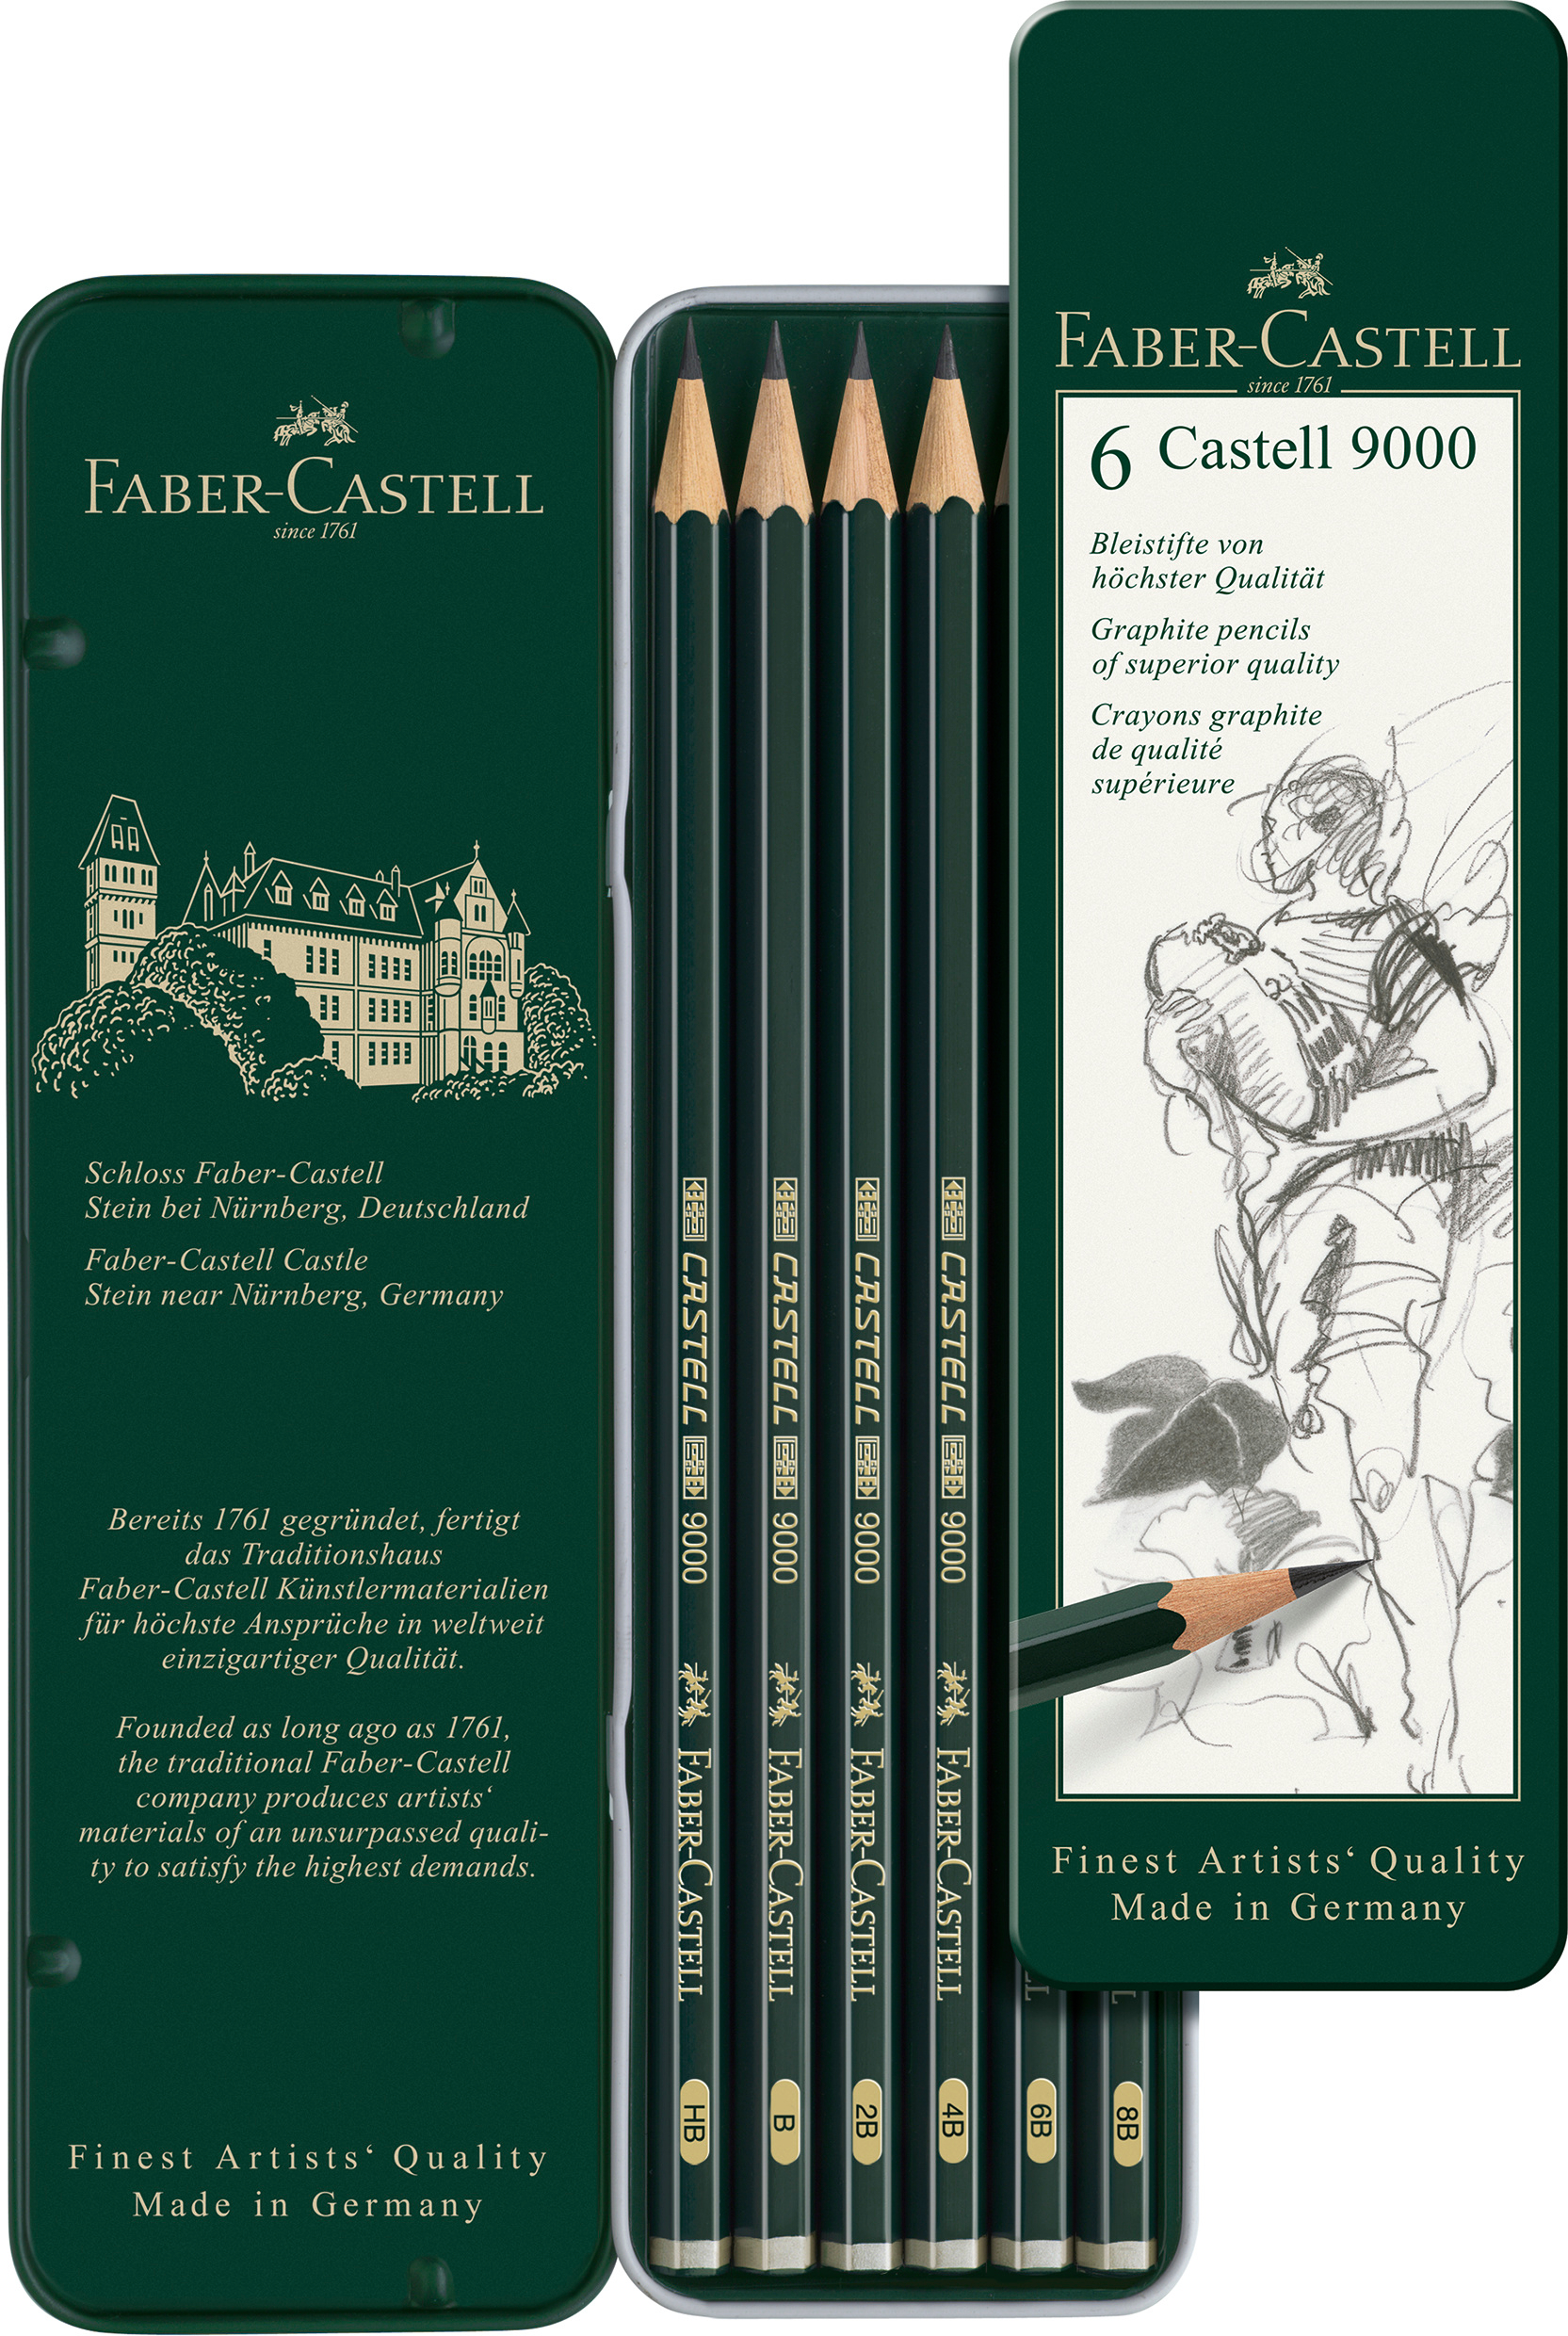 FABER-CASTELL Crayon CASTELL 9000 119063 metallic box 6 pcs.